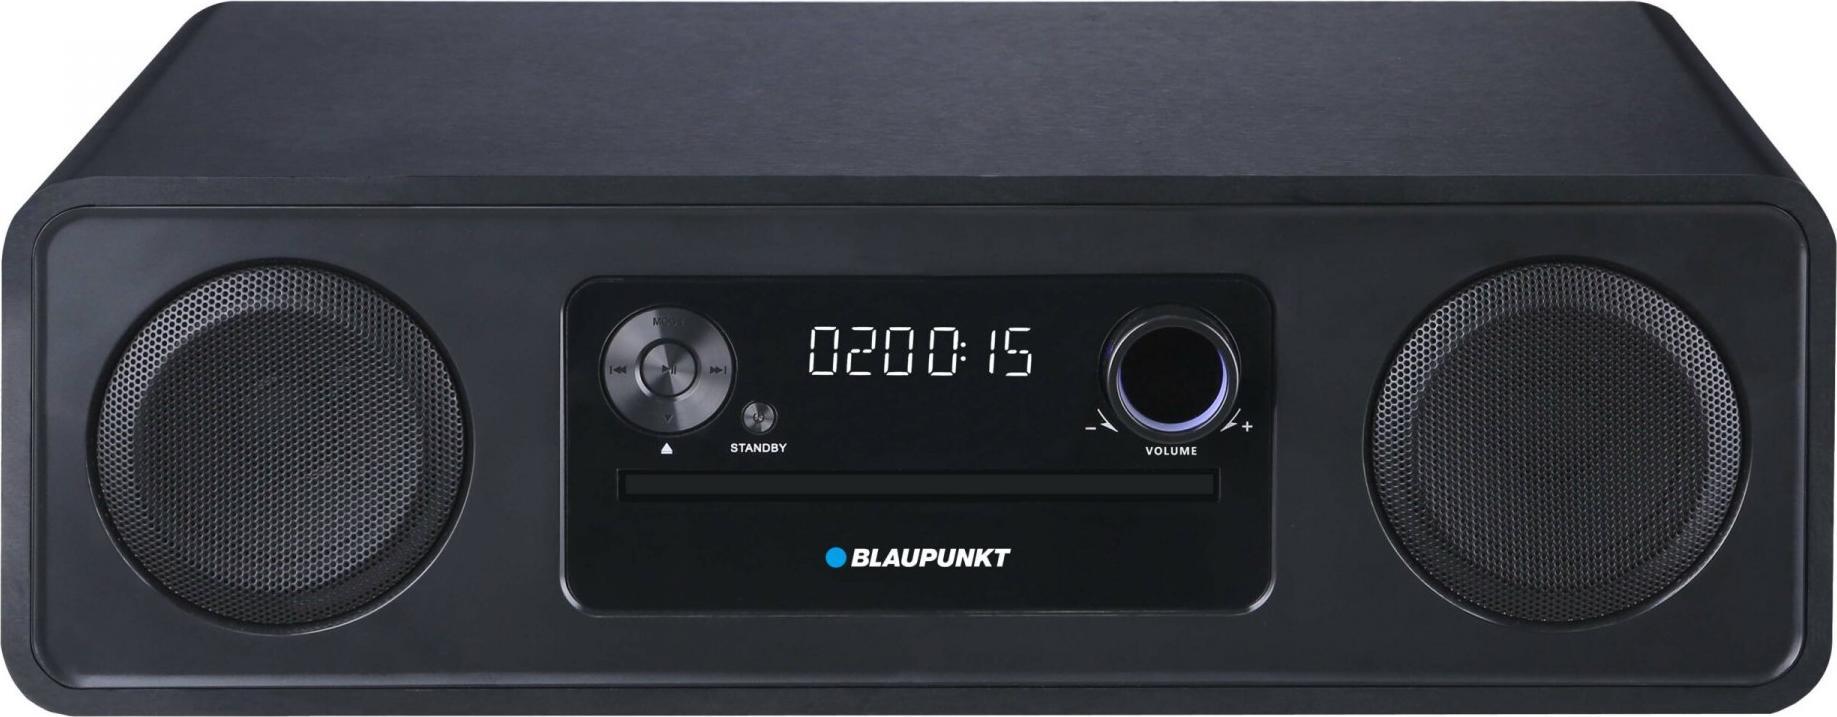 Sisteme audio - Microsistem BT, CD/USB, FM, Blaupunkt MS20BK, negru